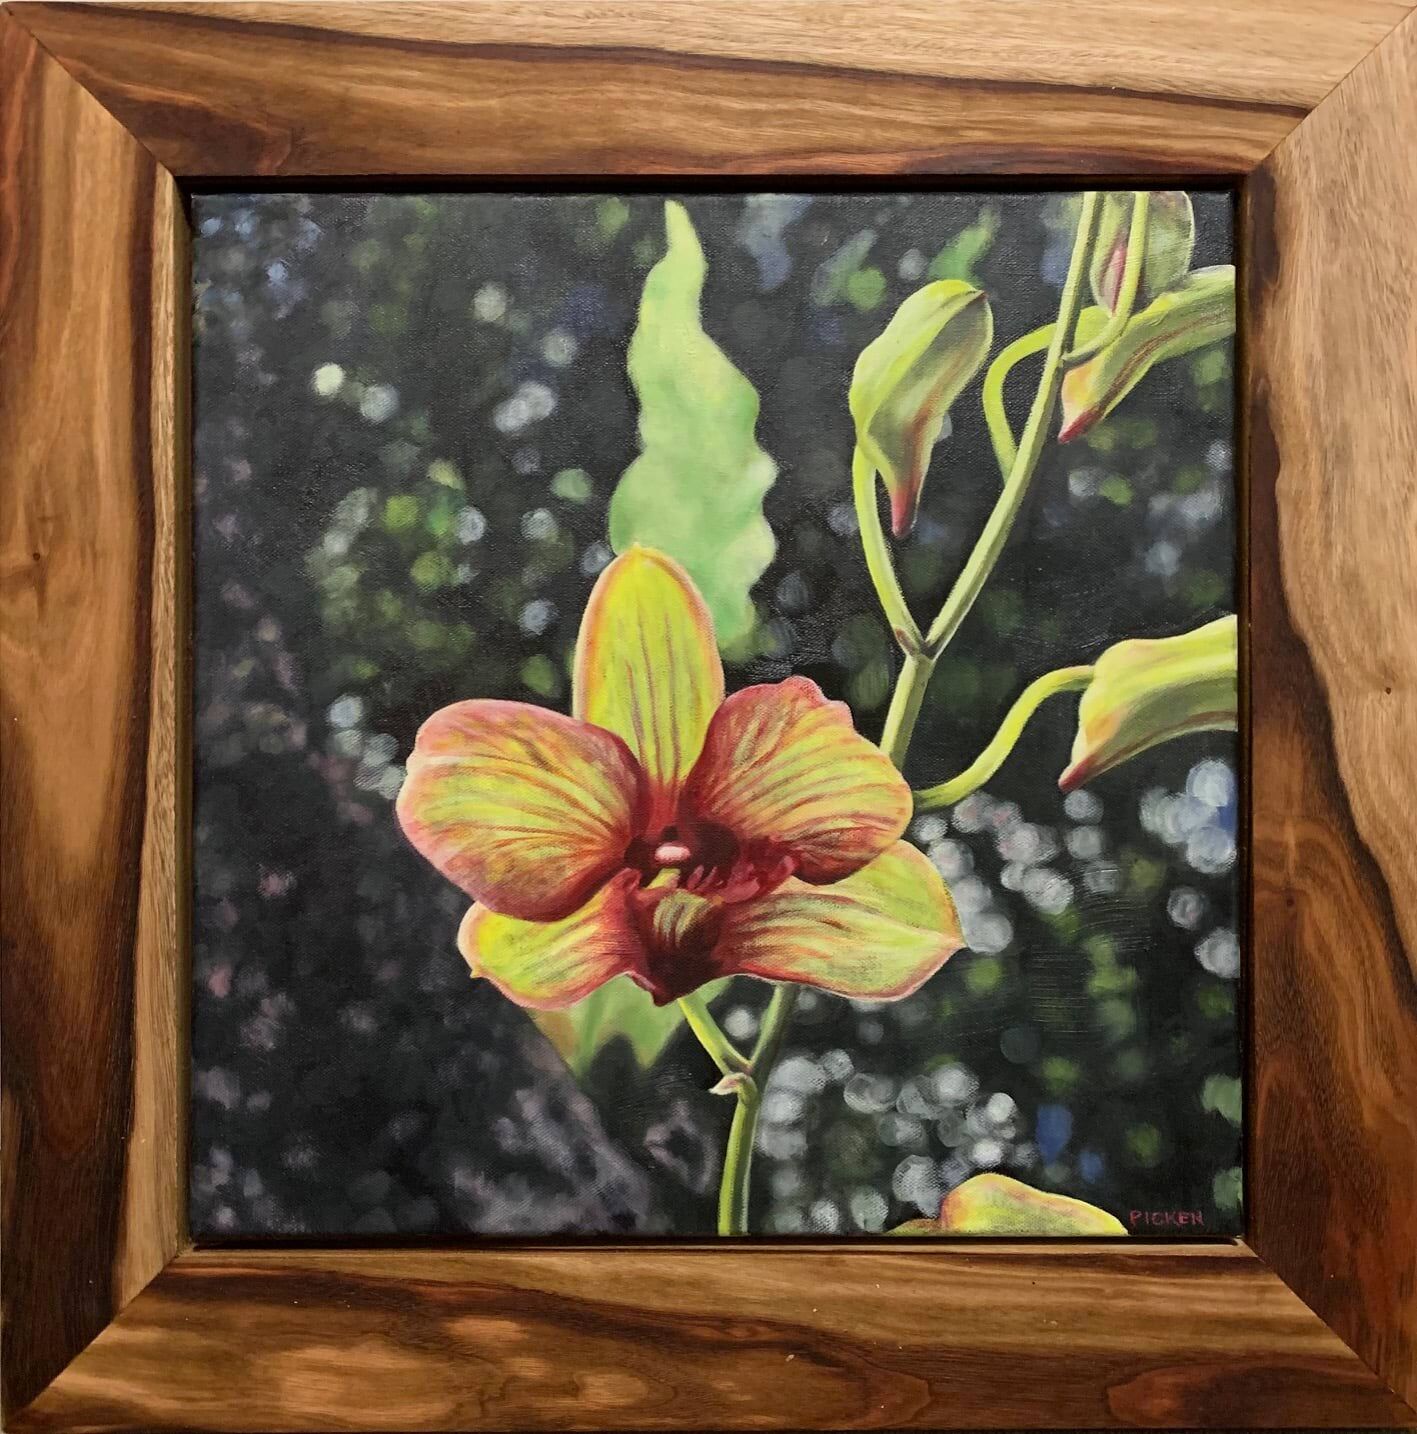 Garden orchid - Jakarta Oil on stretched canvas 40 x 40cms Framed Margaret Picken.jpeg